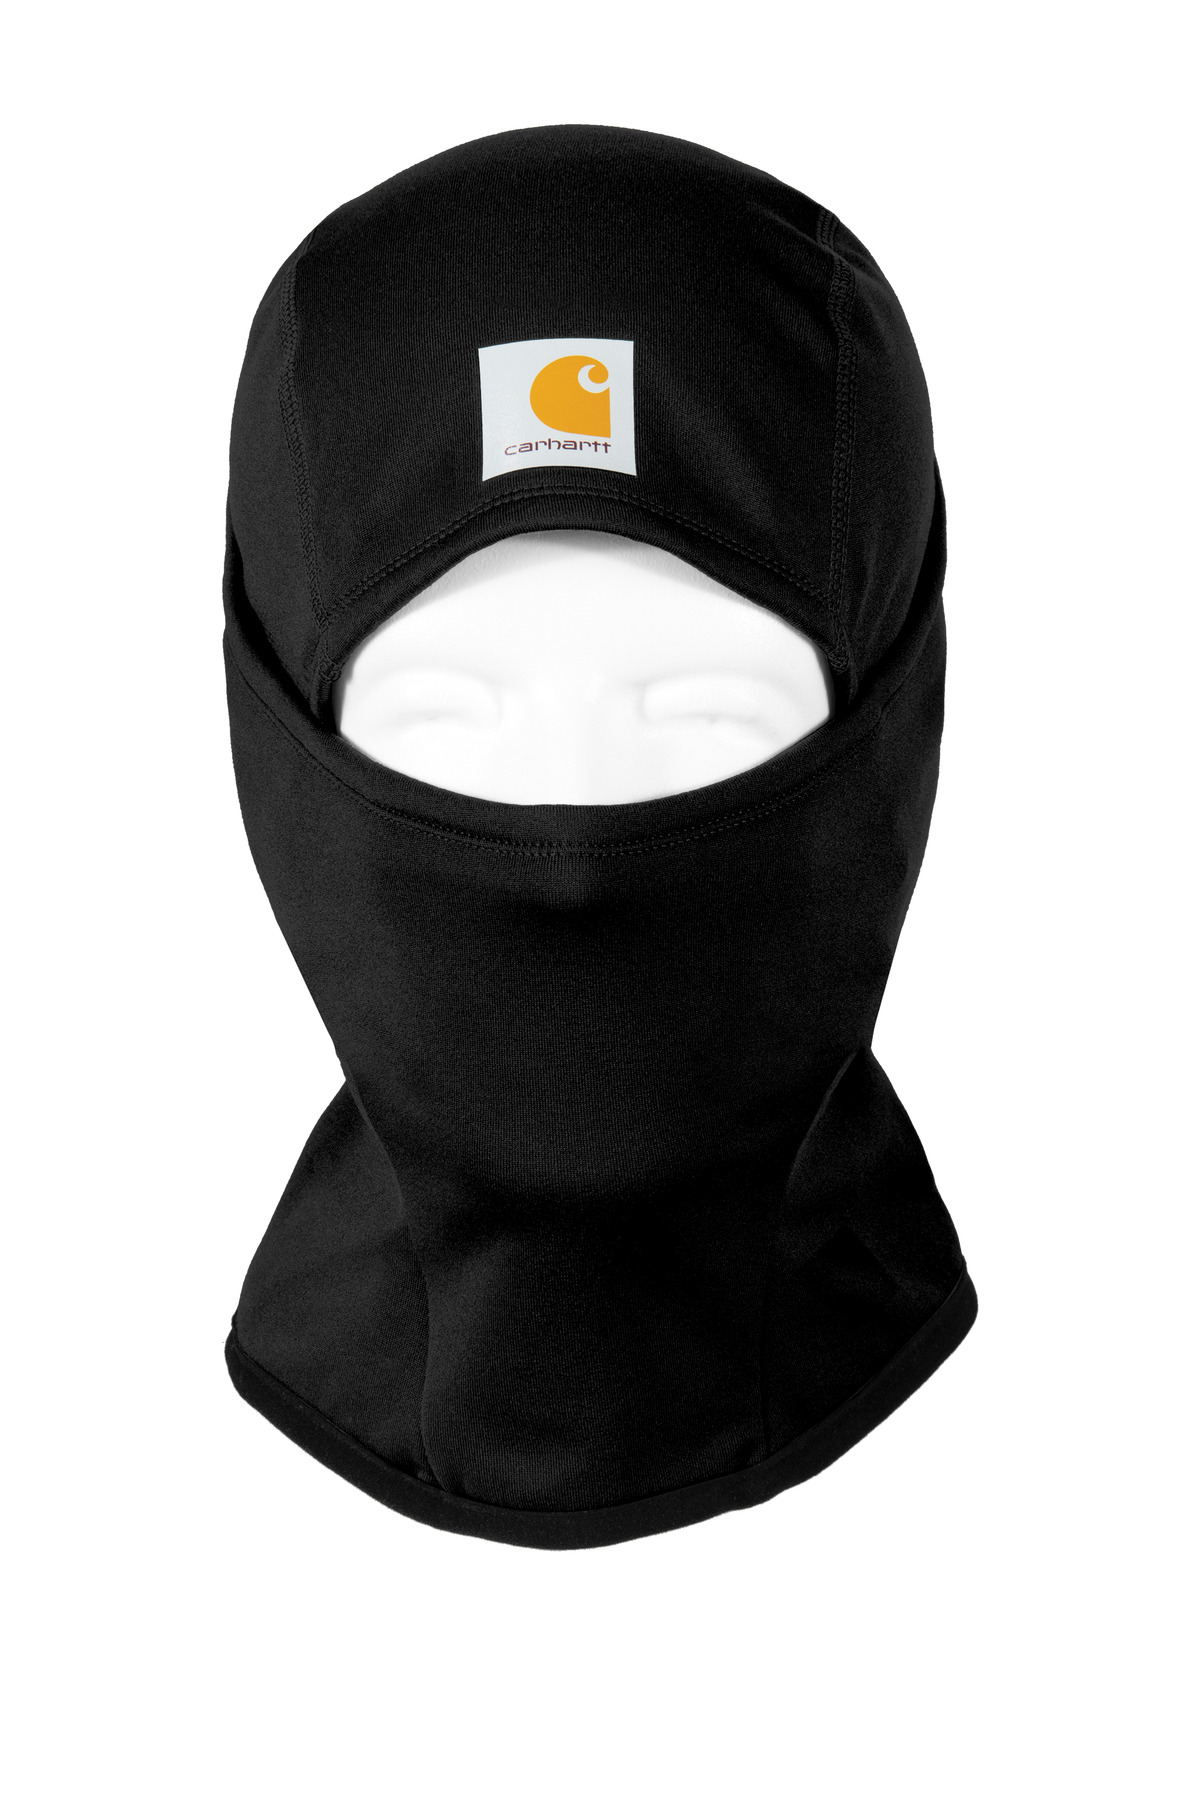 Carhartt Hospitality Caps Force ® Helmet-Liner Mask.-Carhartt